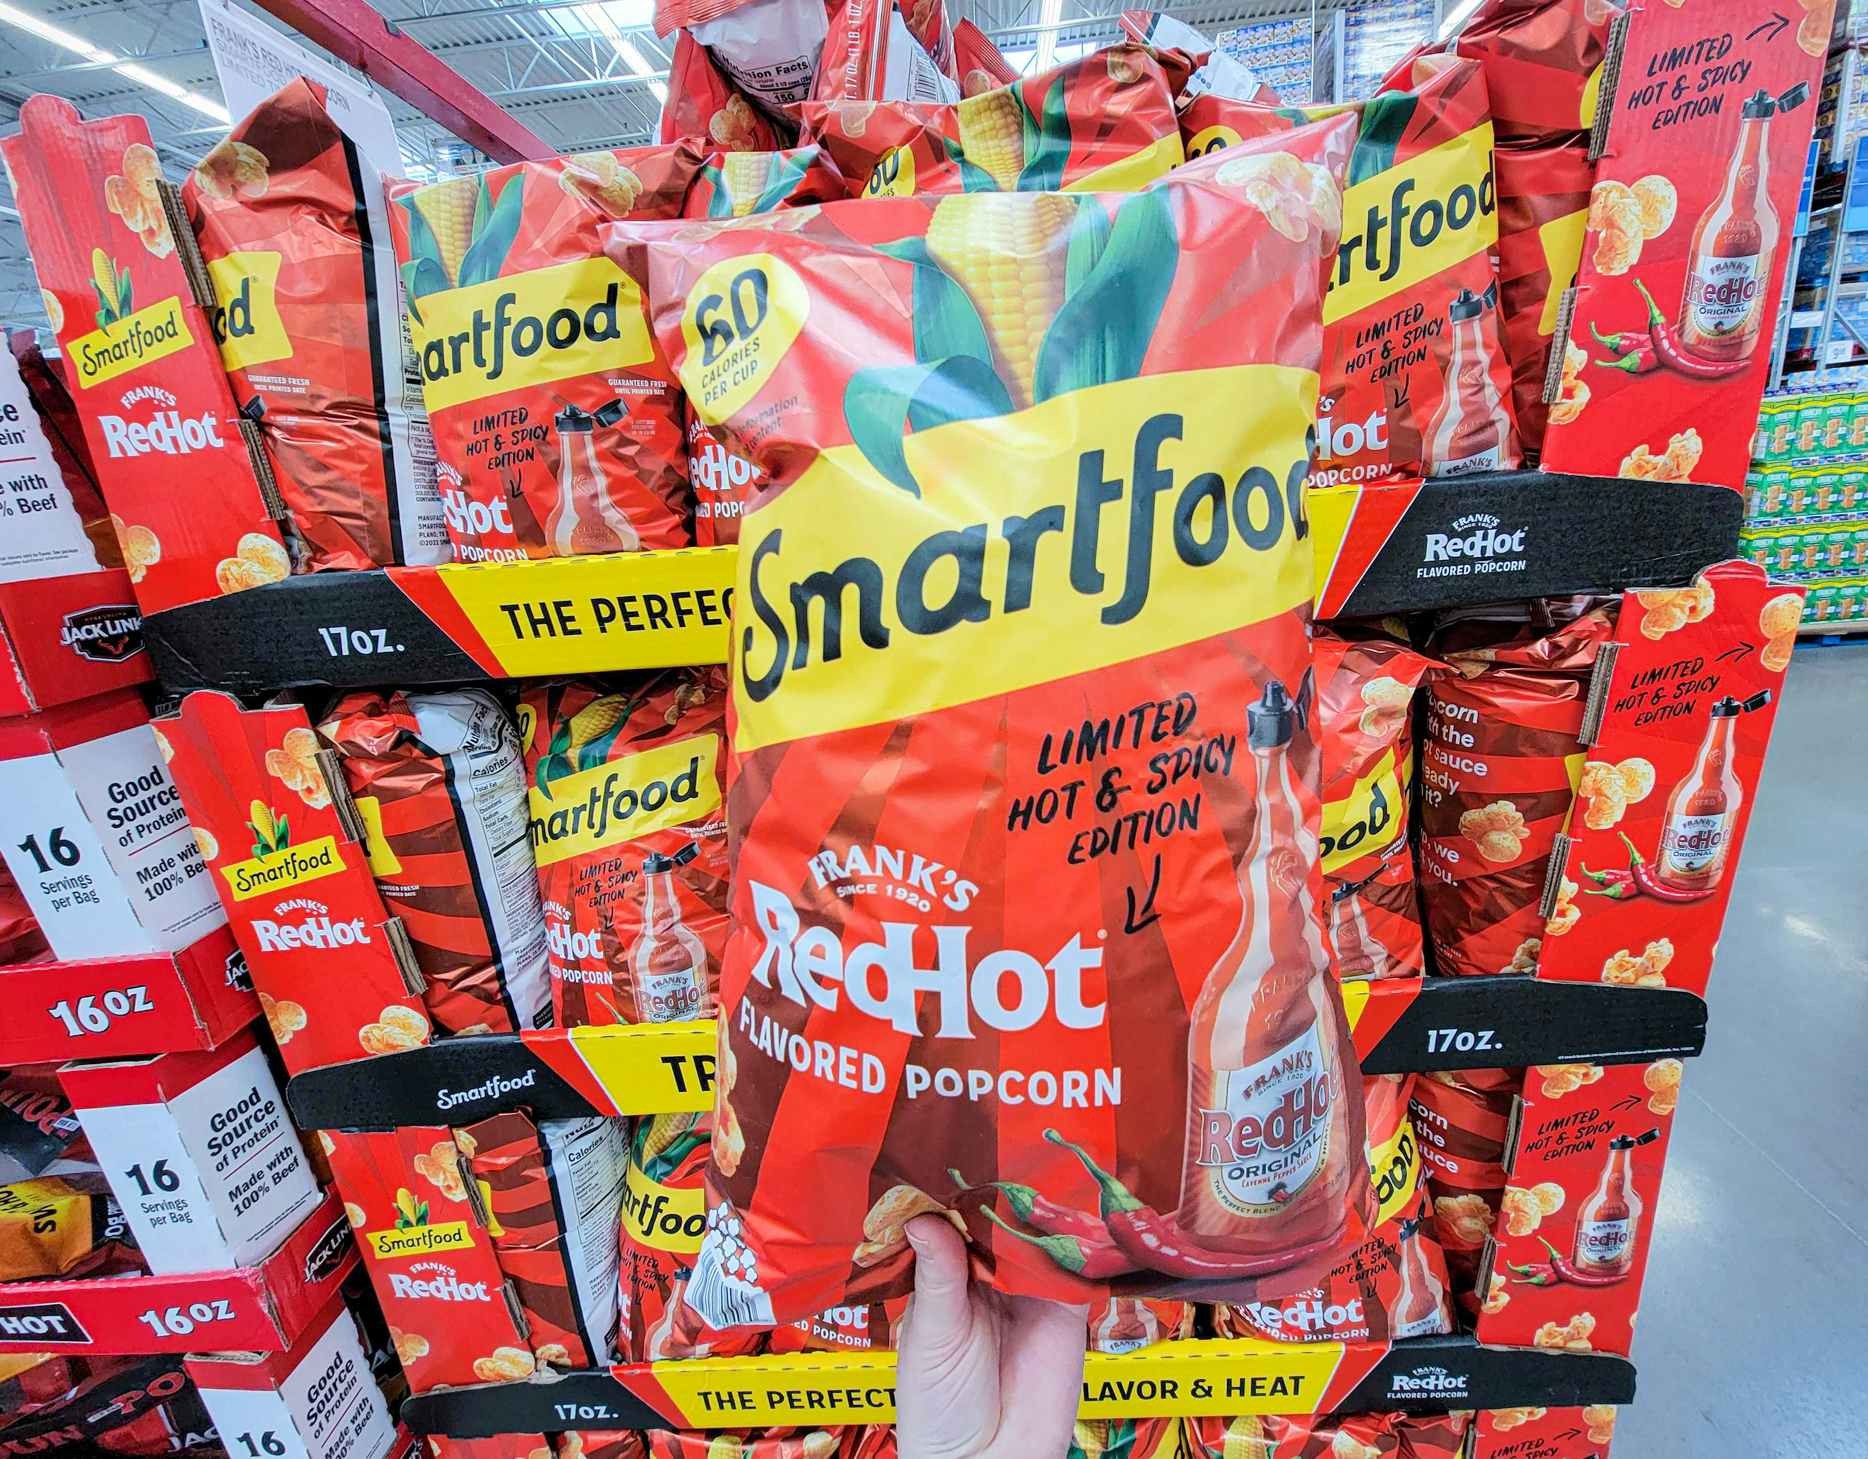 hand holding a bag of smartfood frank's red hot sauce flavored popcorn